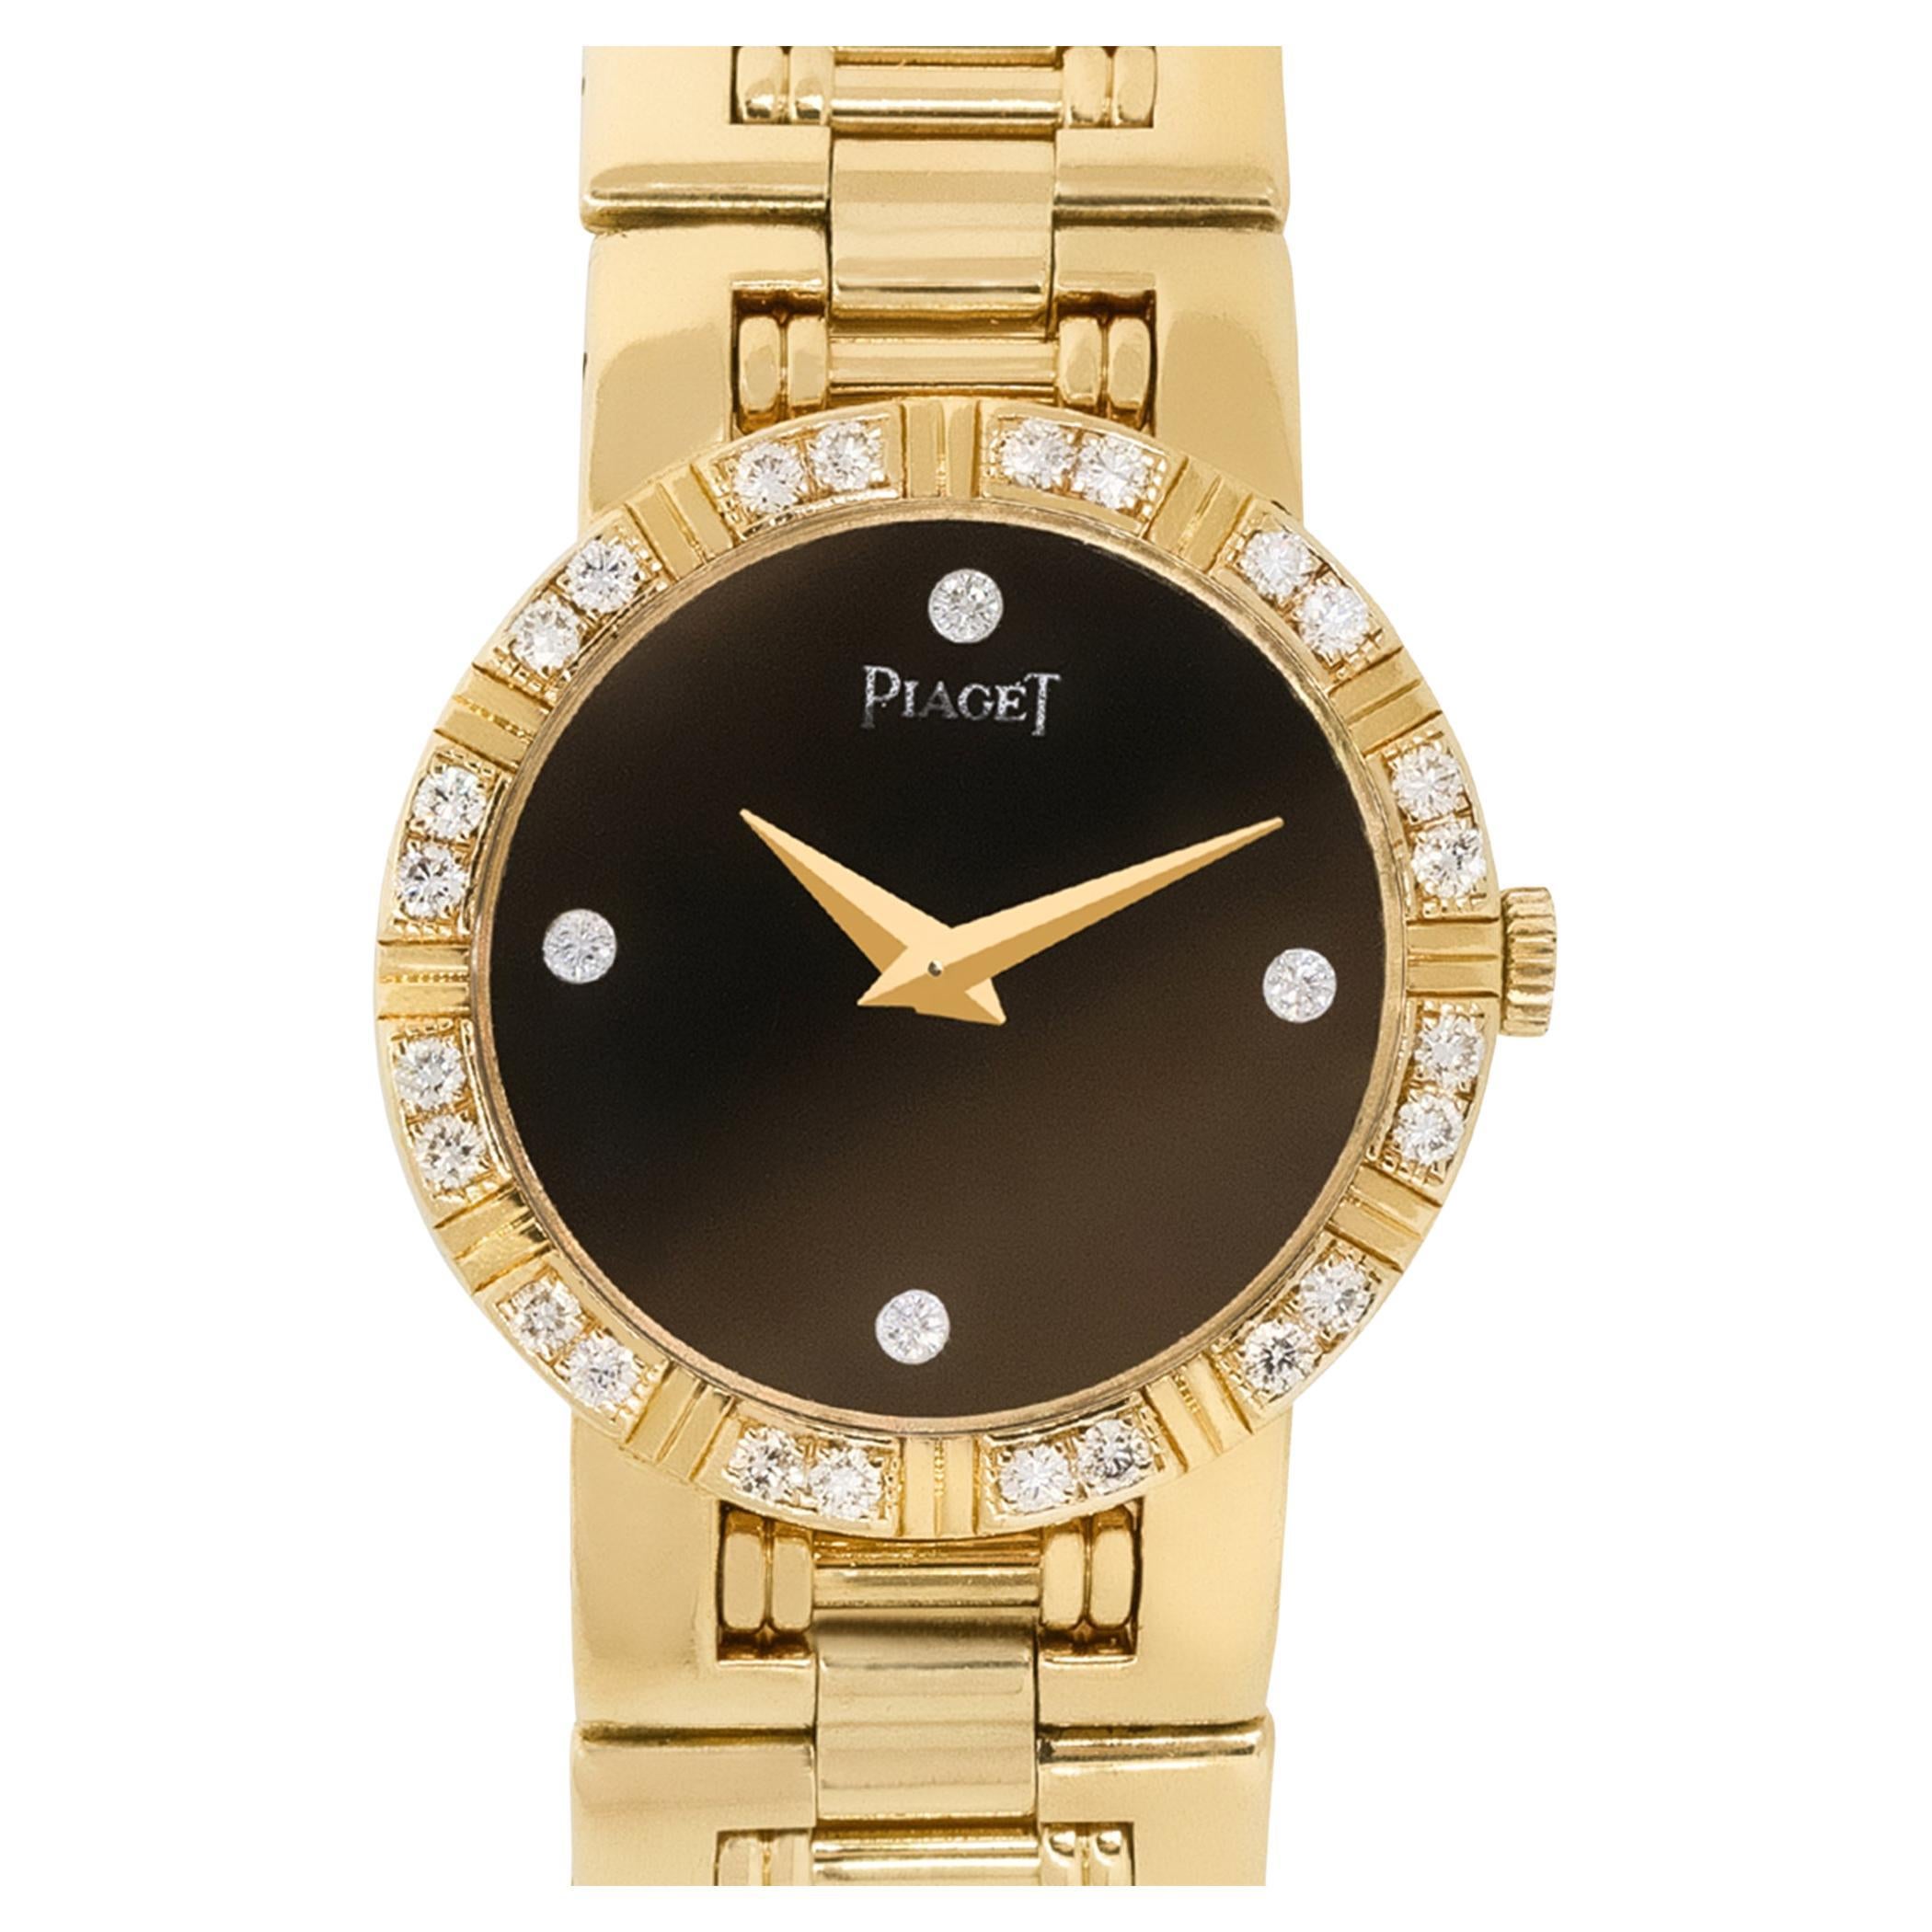 Piaget 80564 18 Karat Black Diamond Dial Ladies Watch In Stock For Sale